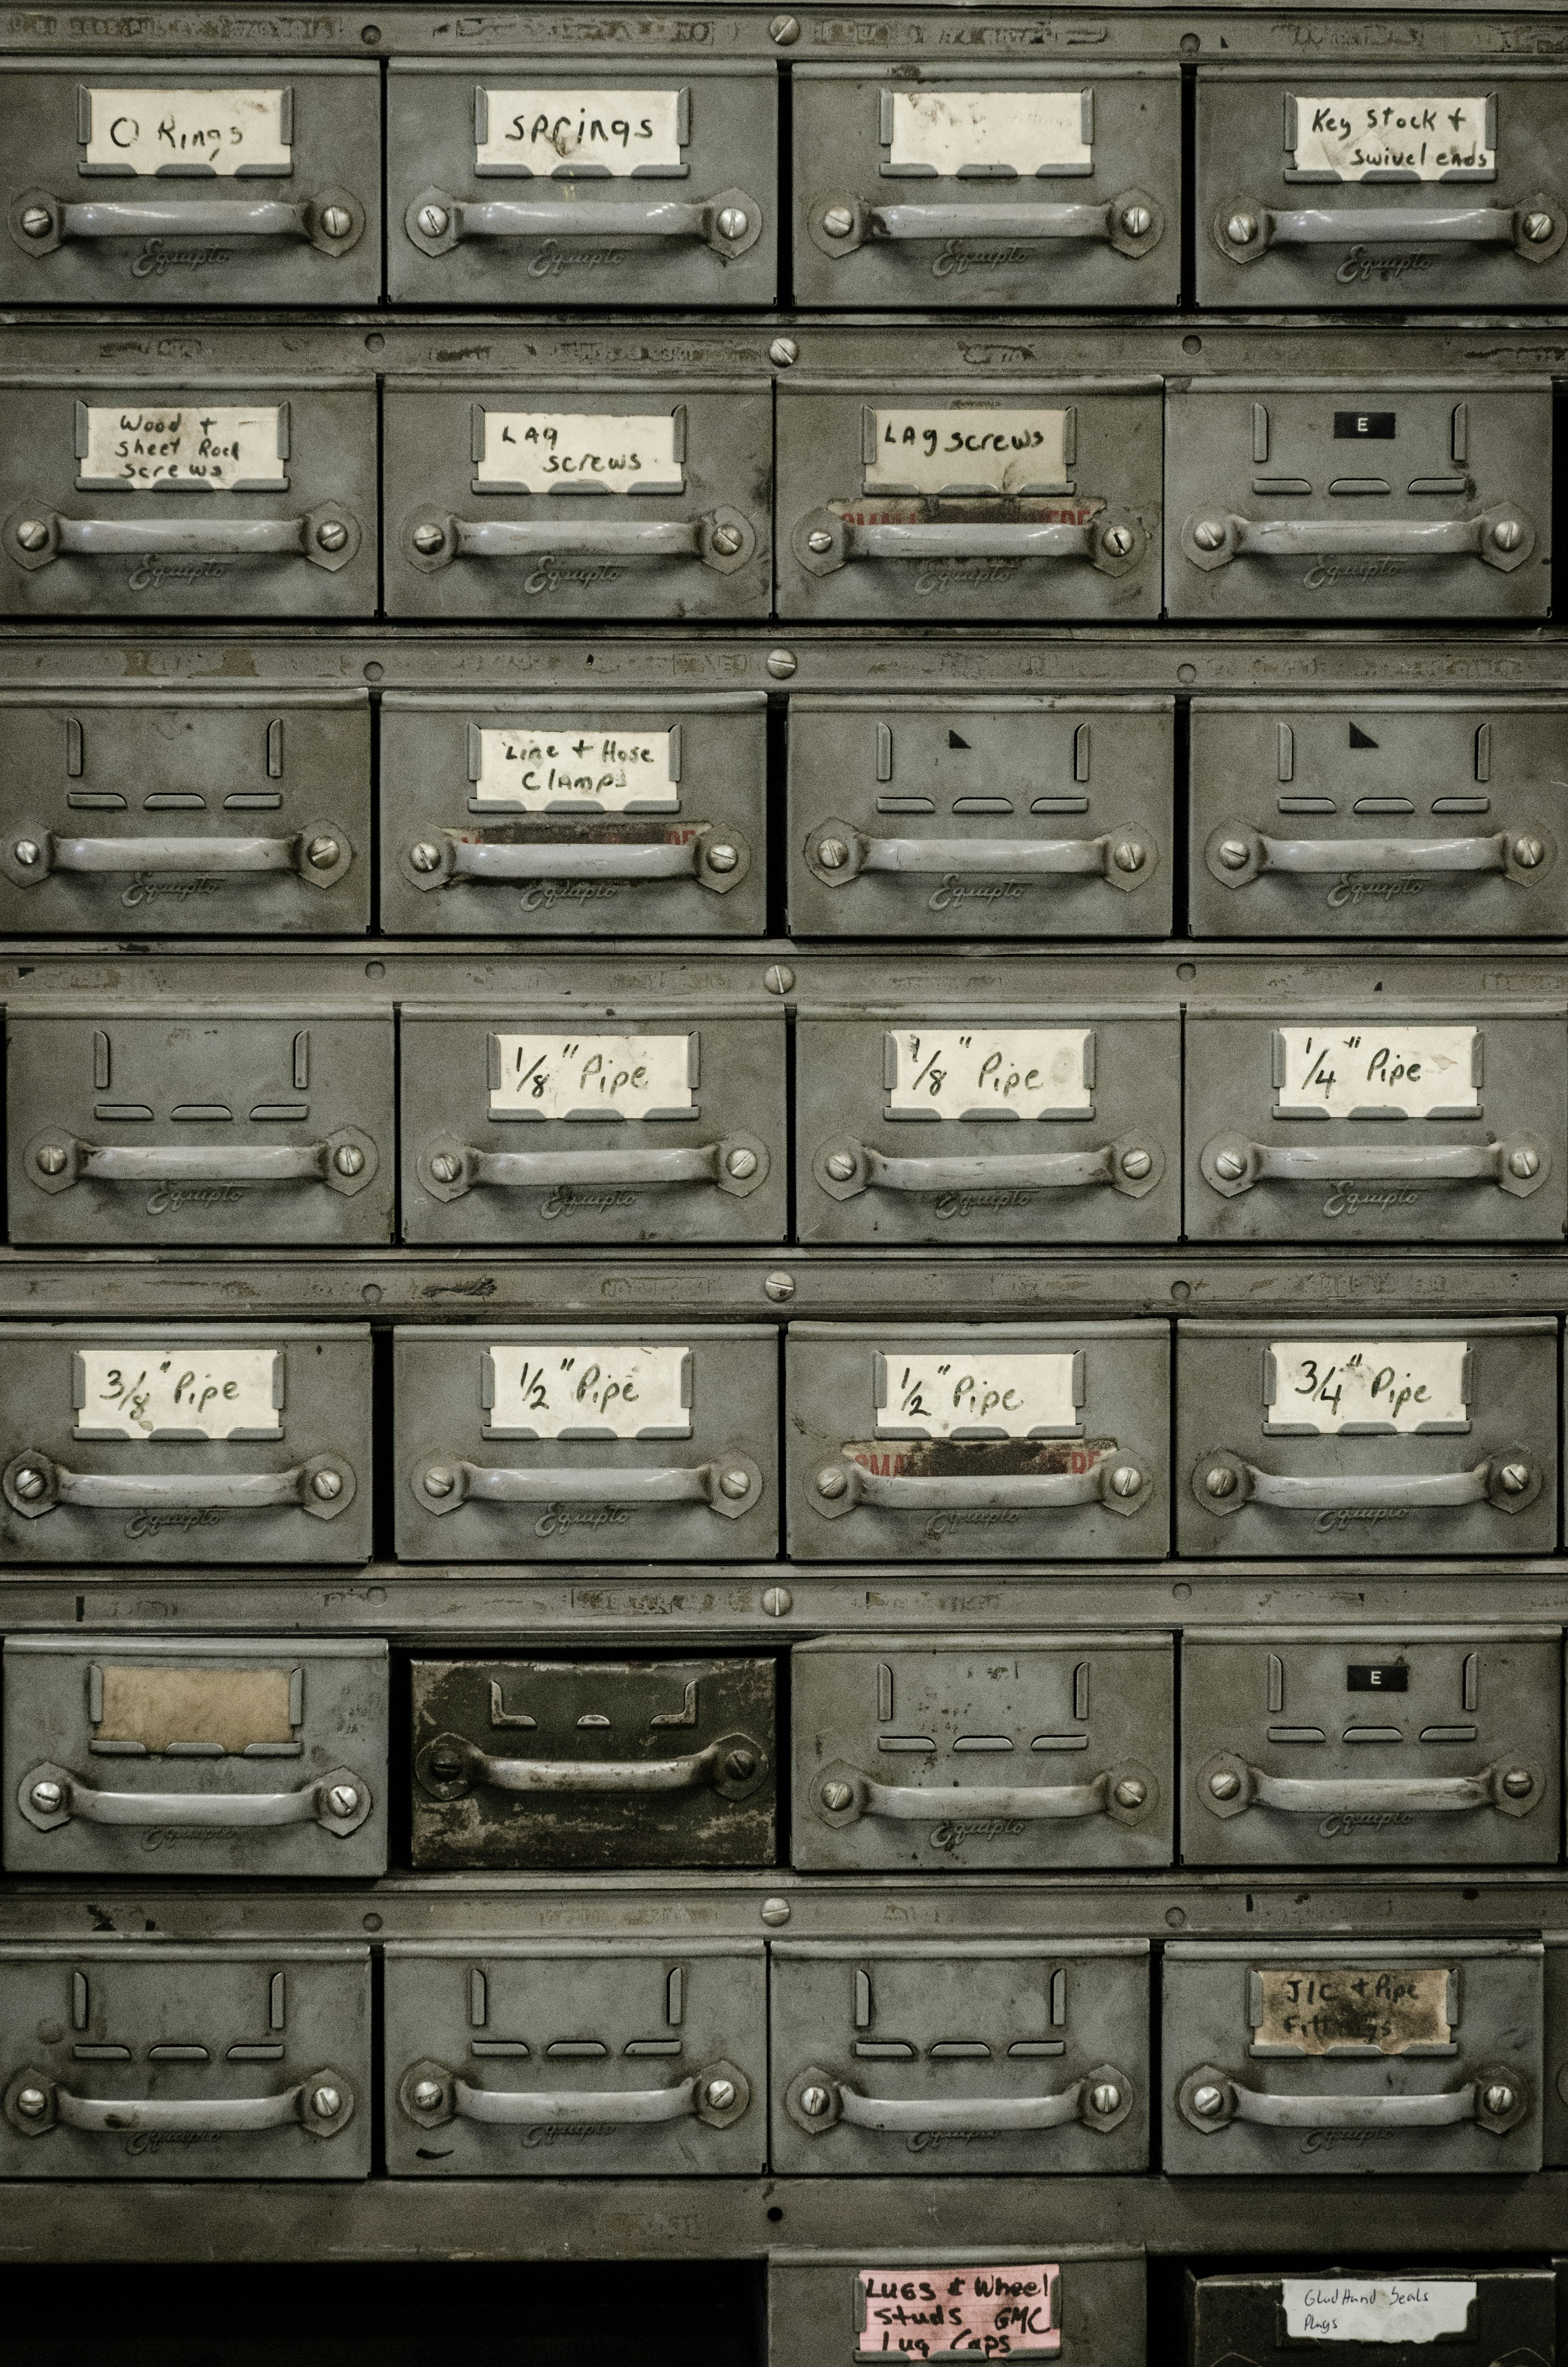 Organized document cabinet